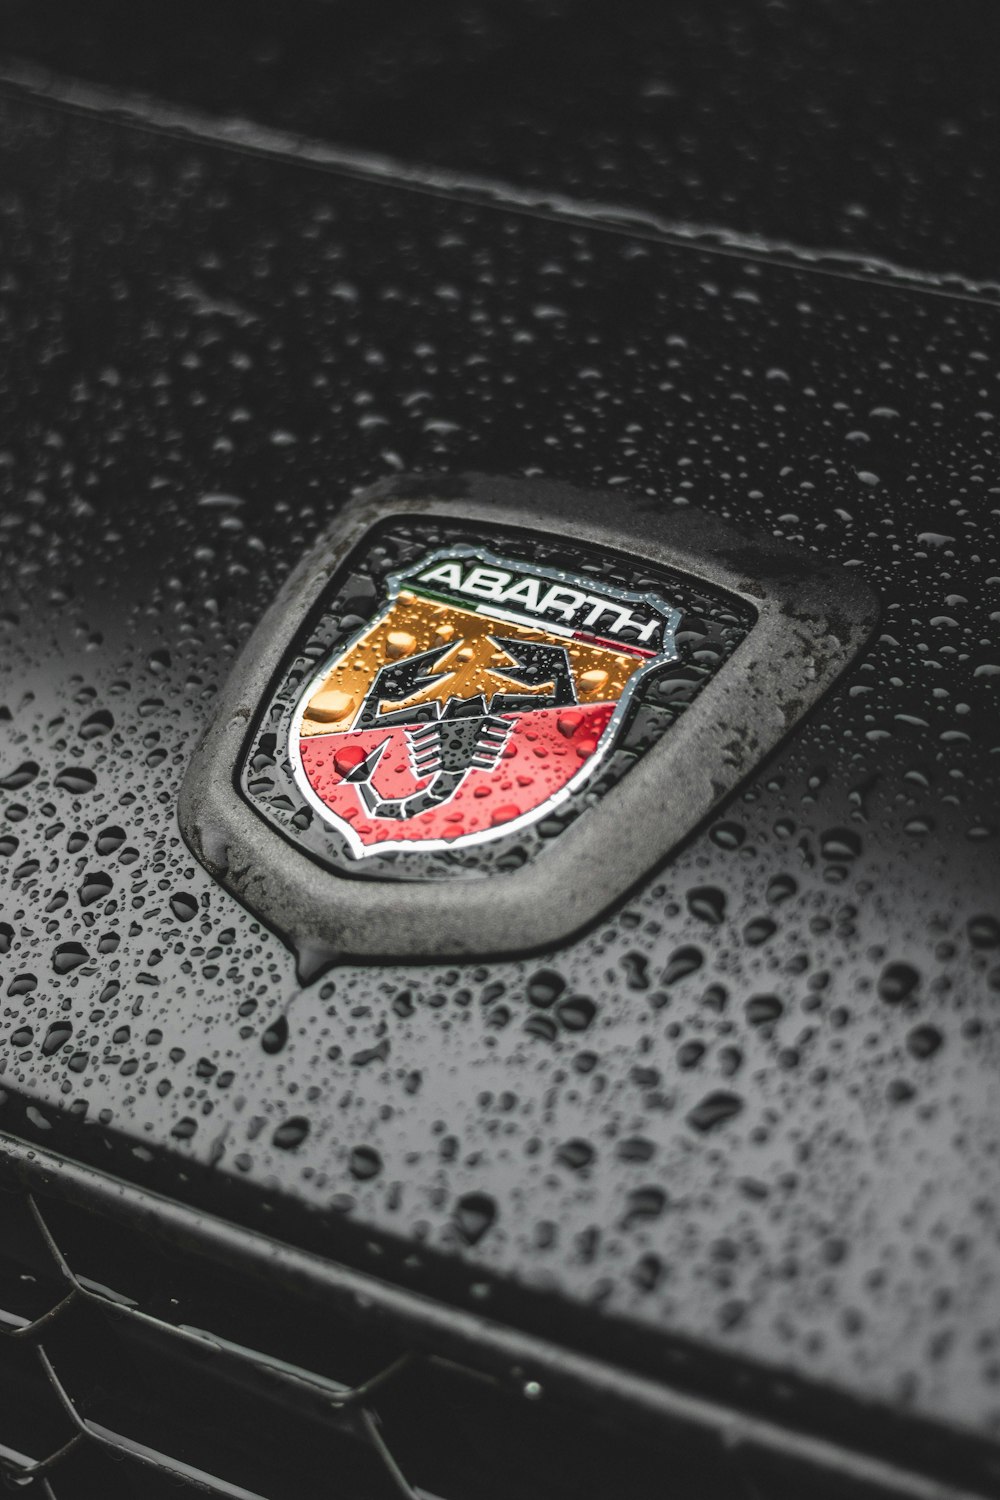 FIAT Abarth emblem